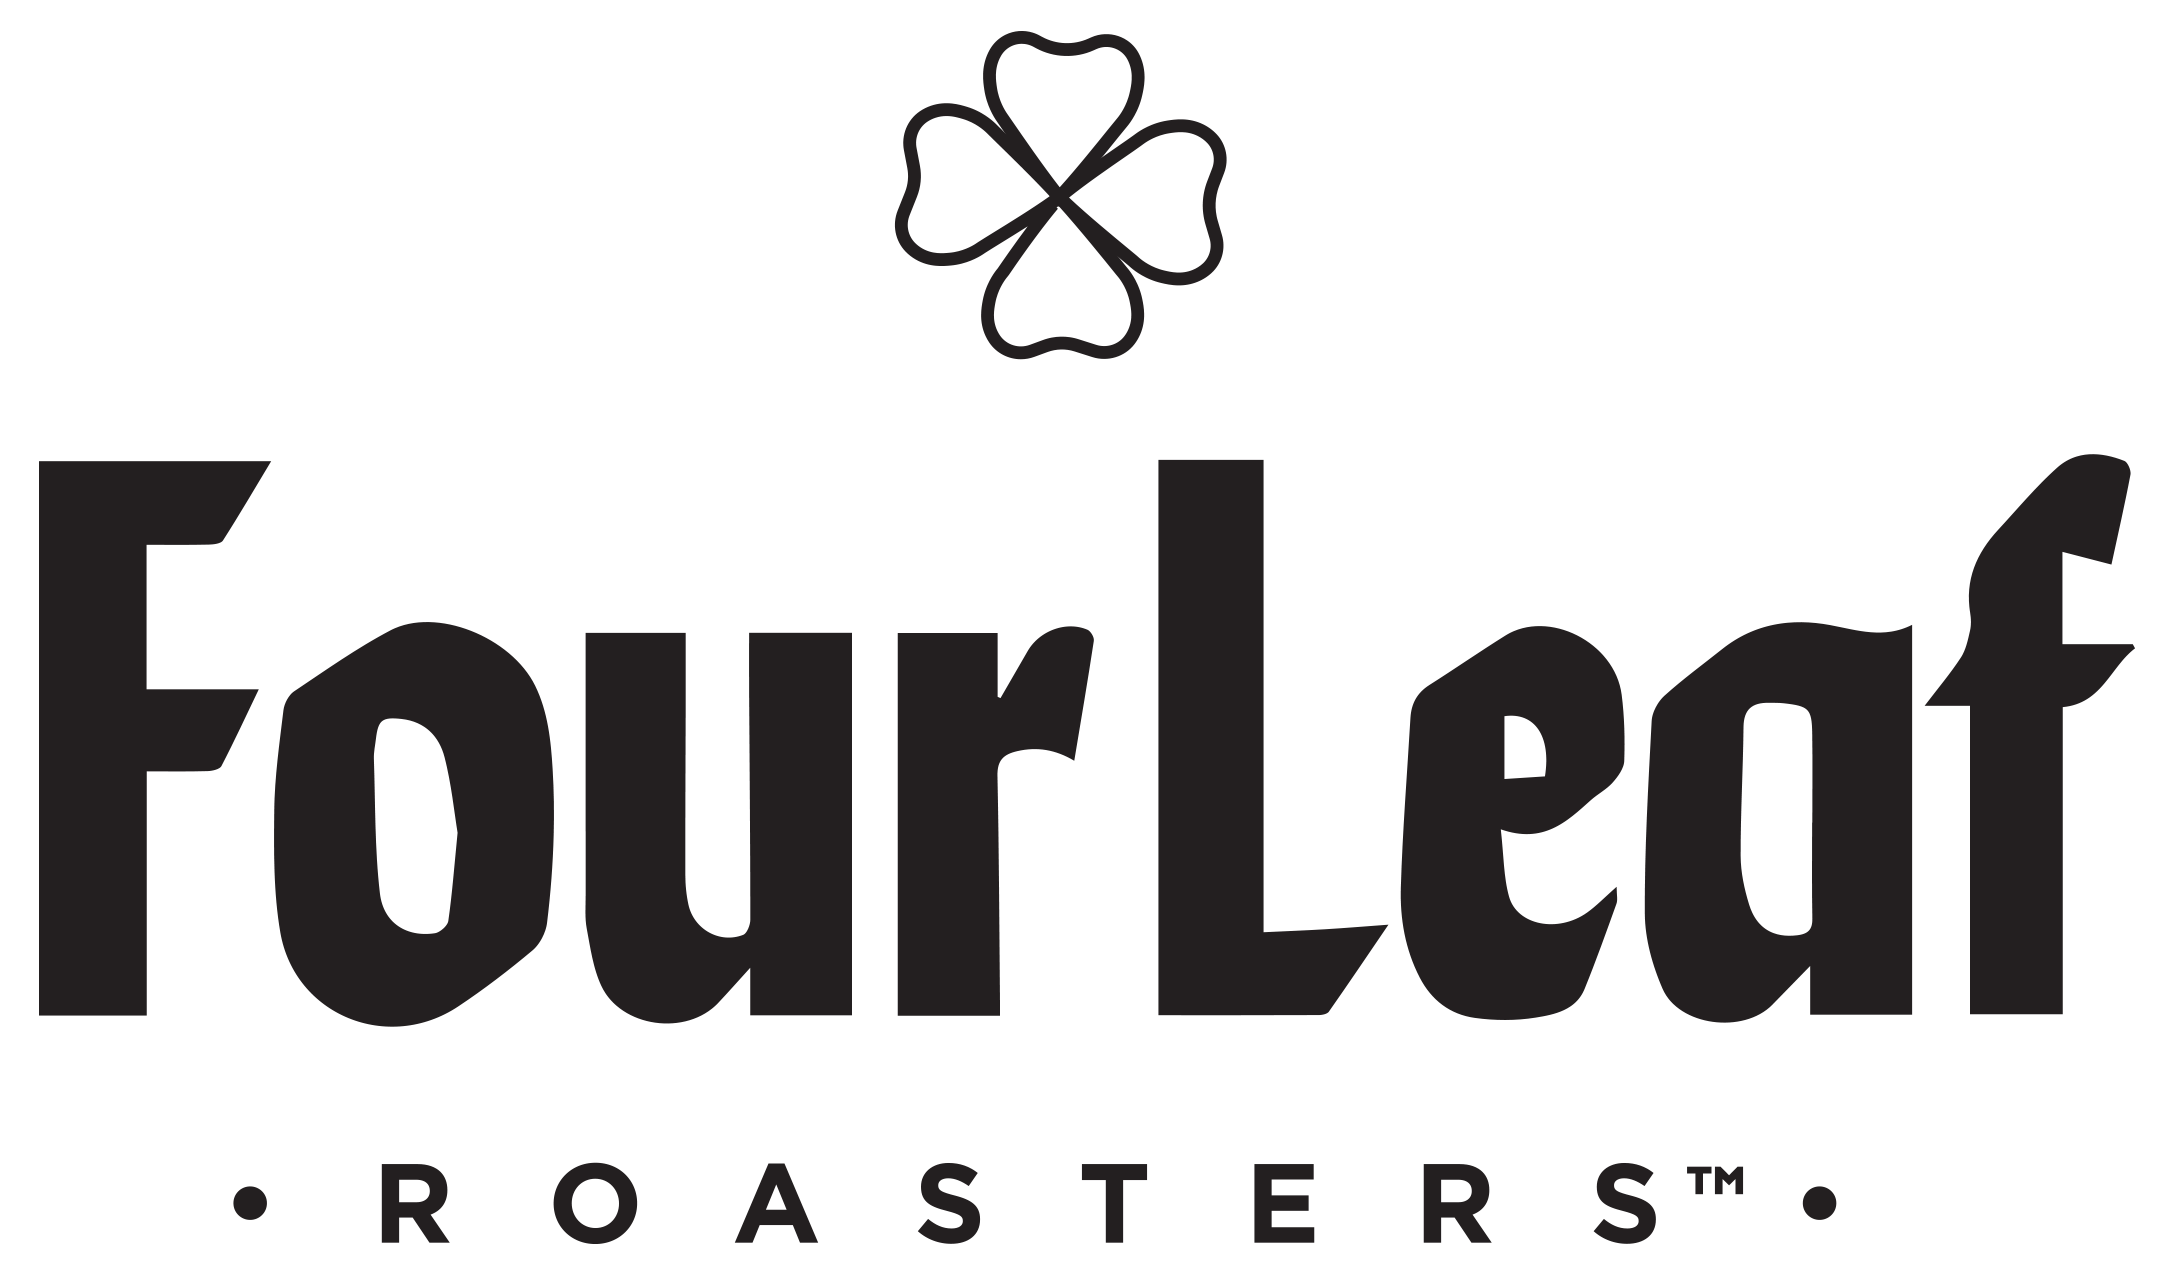 Four Leaf Coffee Roasters